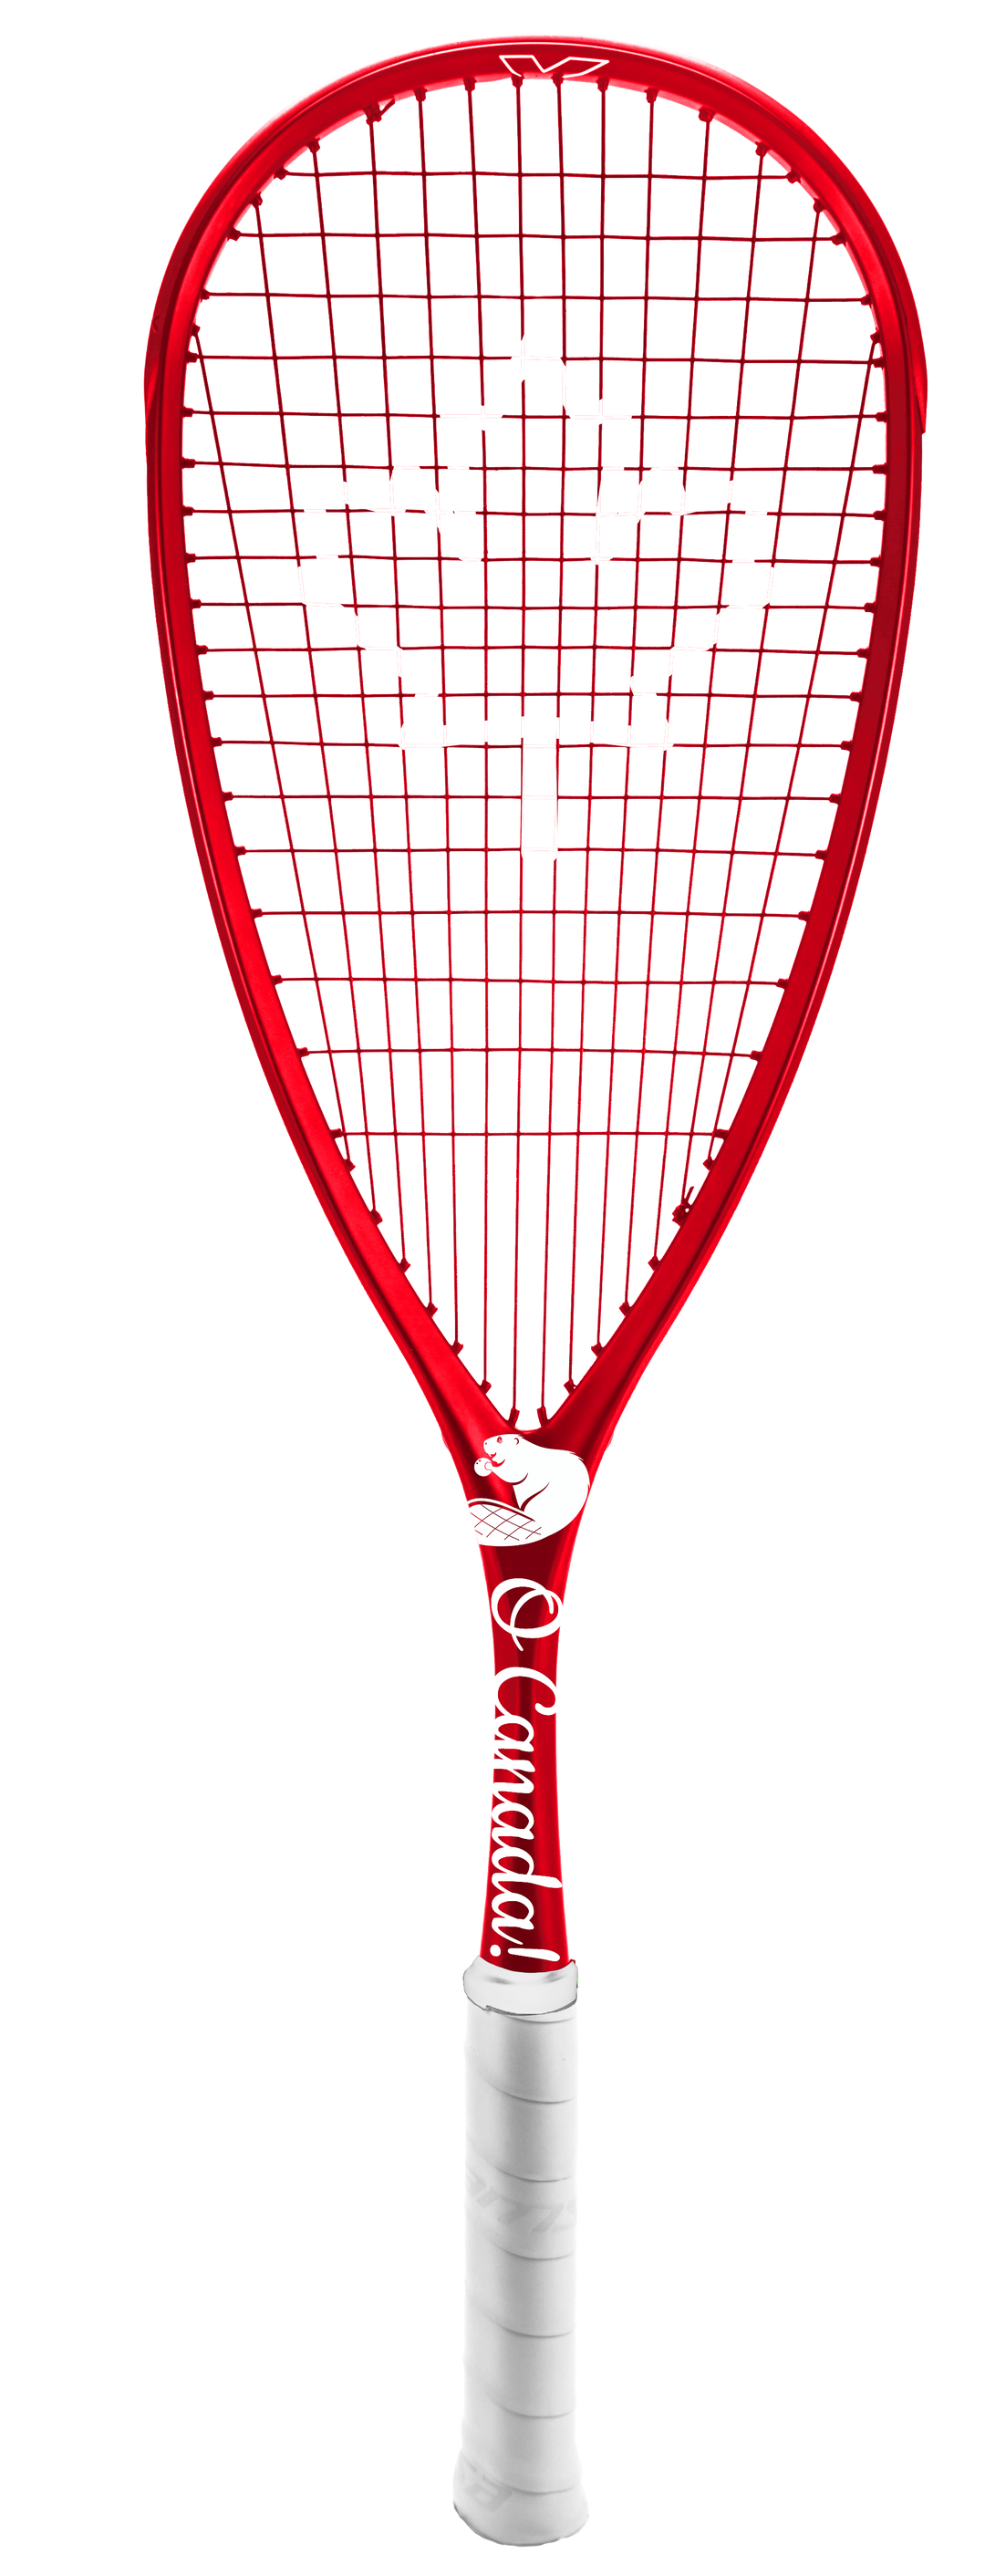 Xamsa Onyx - O Canada! - Limited Edition Squash Racquet with bumper - XamsaSquash